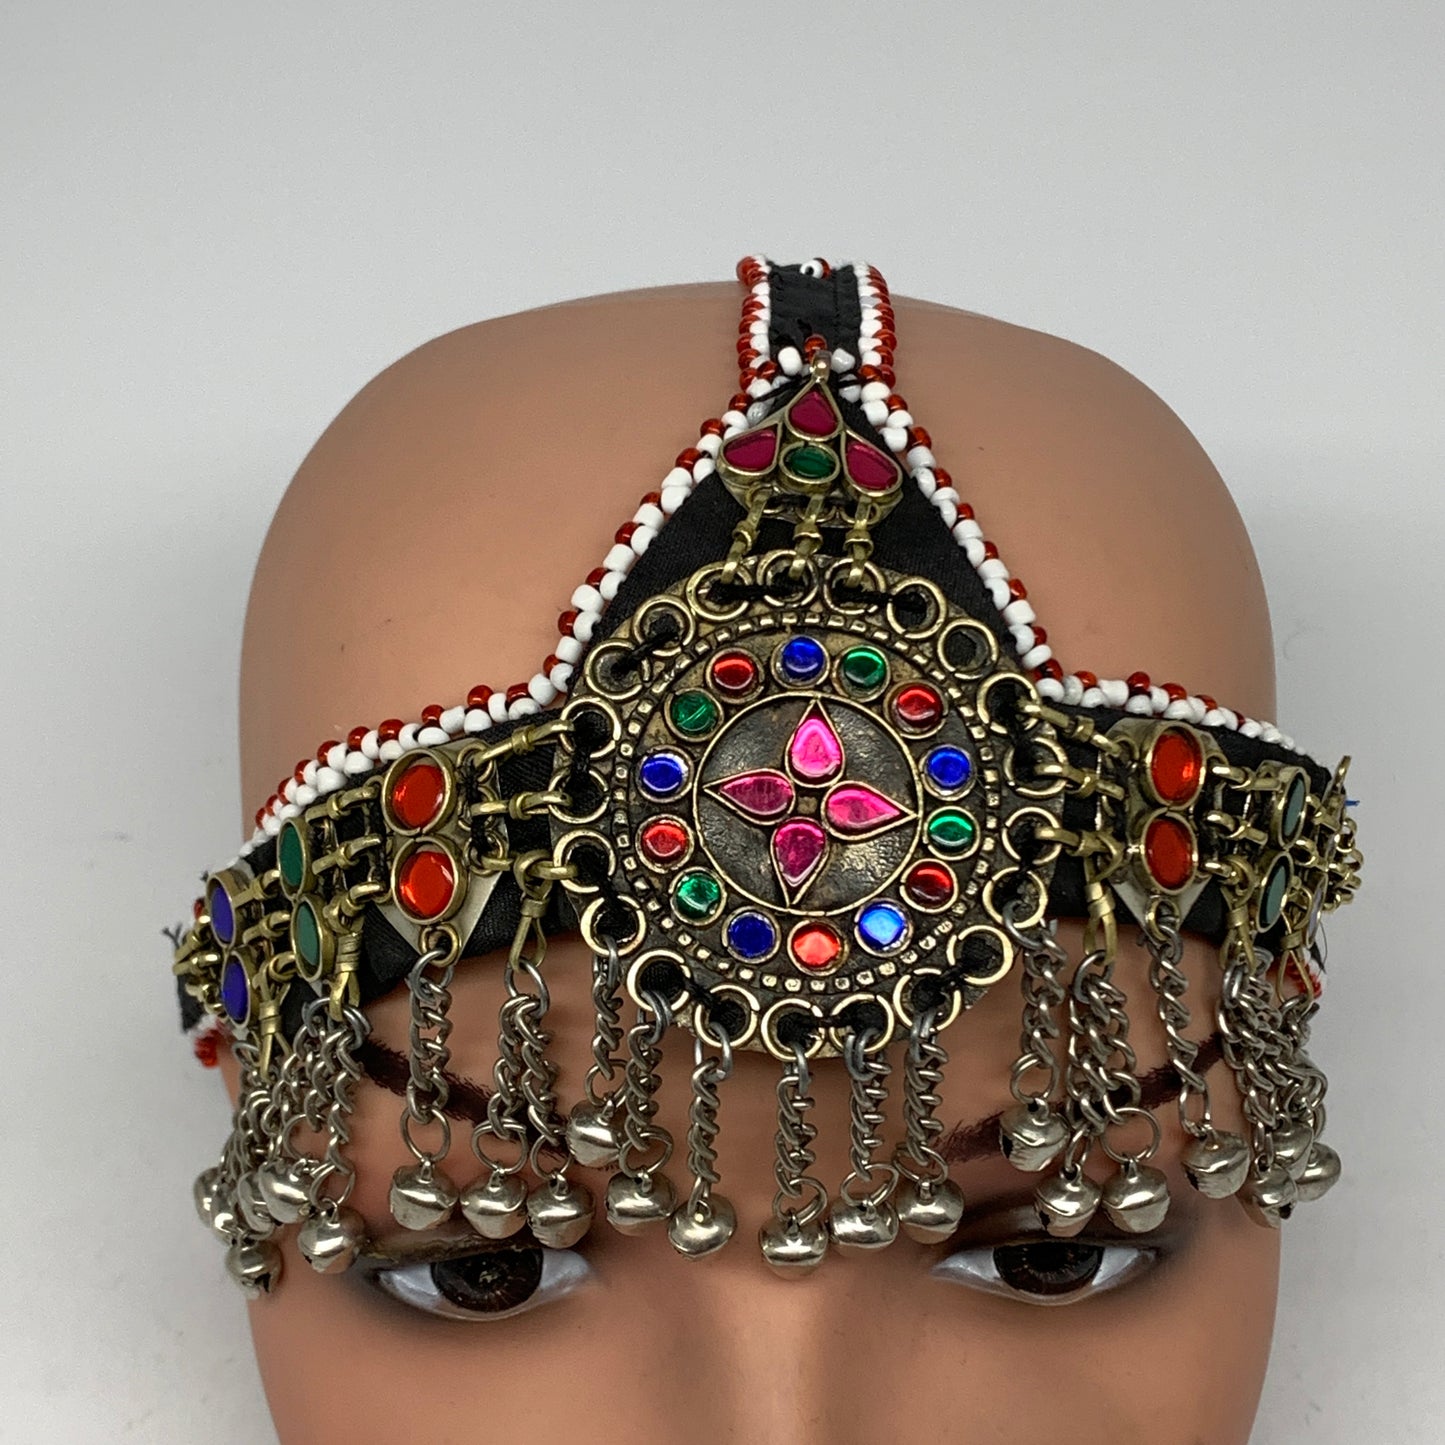 75.3g, Kuchi Headdress Headpiece Afghan Ethnic Tribal Jingle Bells @Afghanistan,